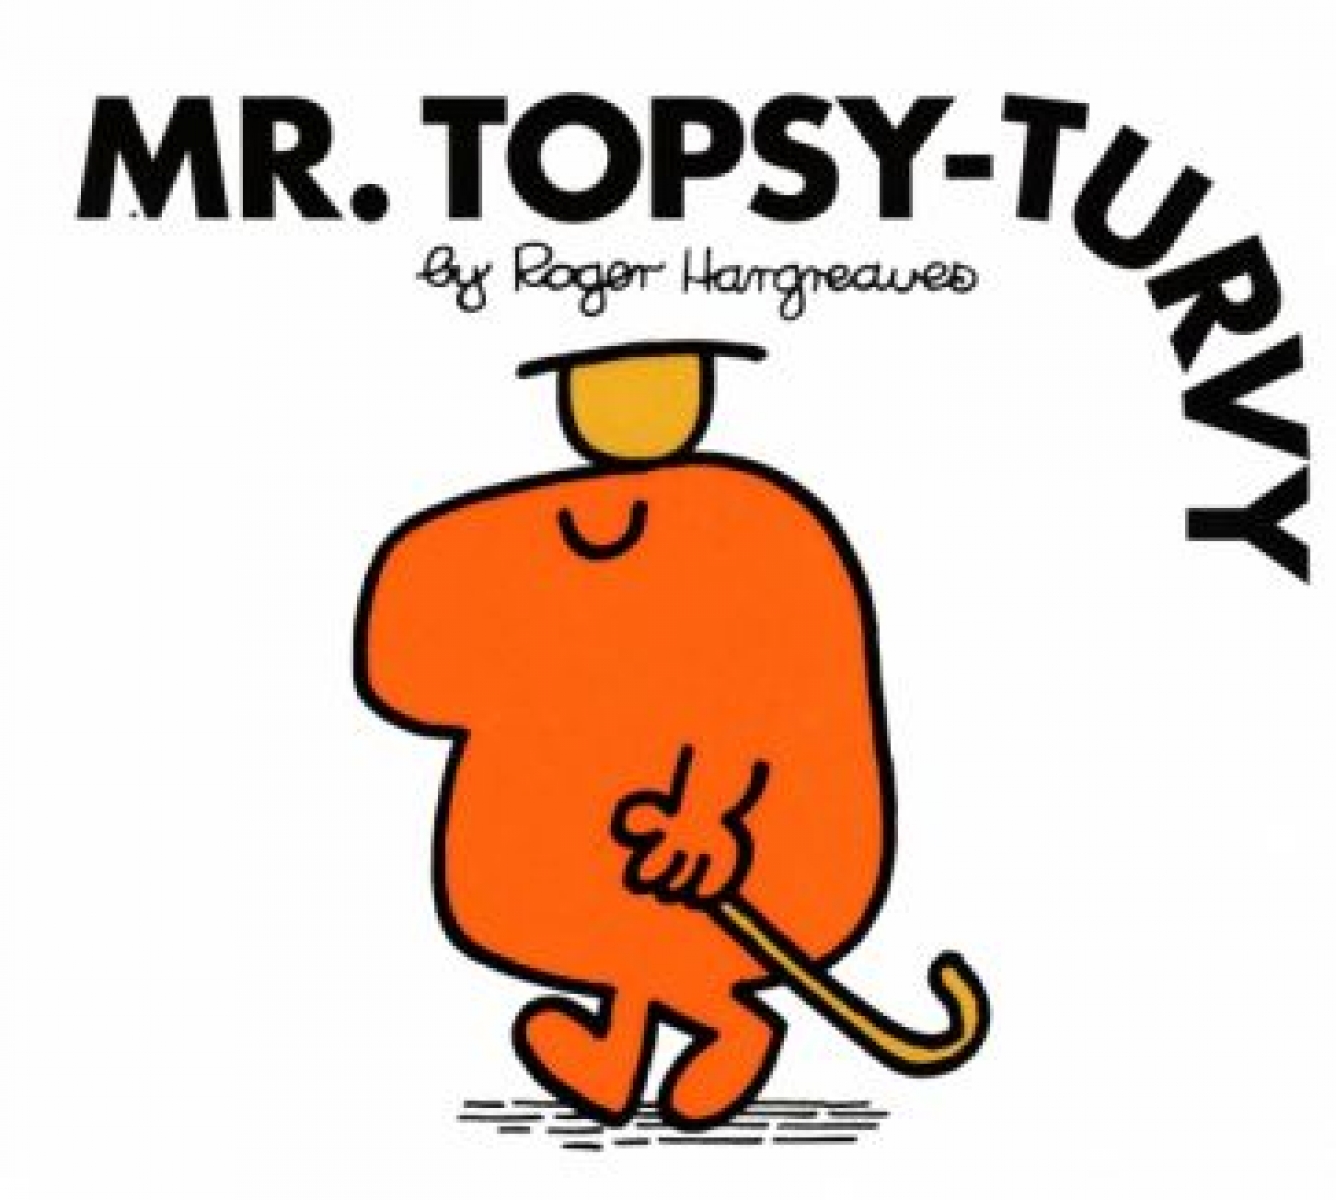 Hargreaves Roger Mr. Topsy-Turvy 